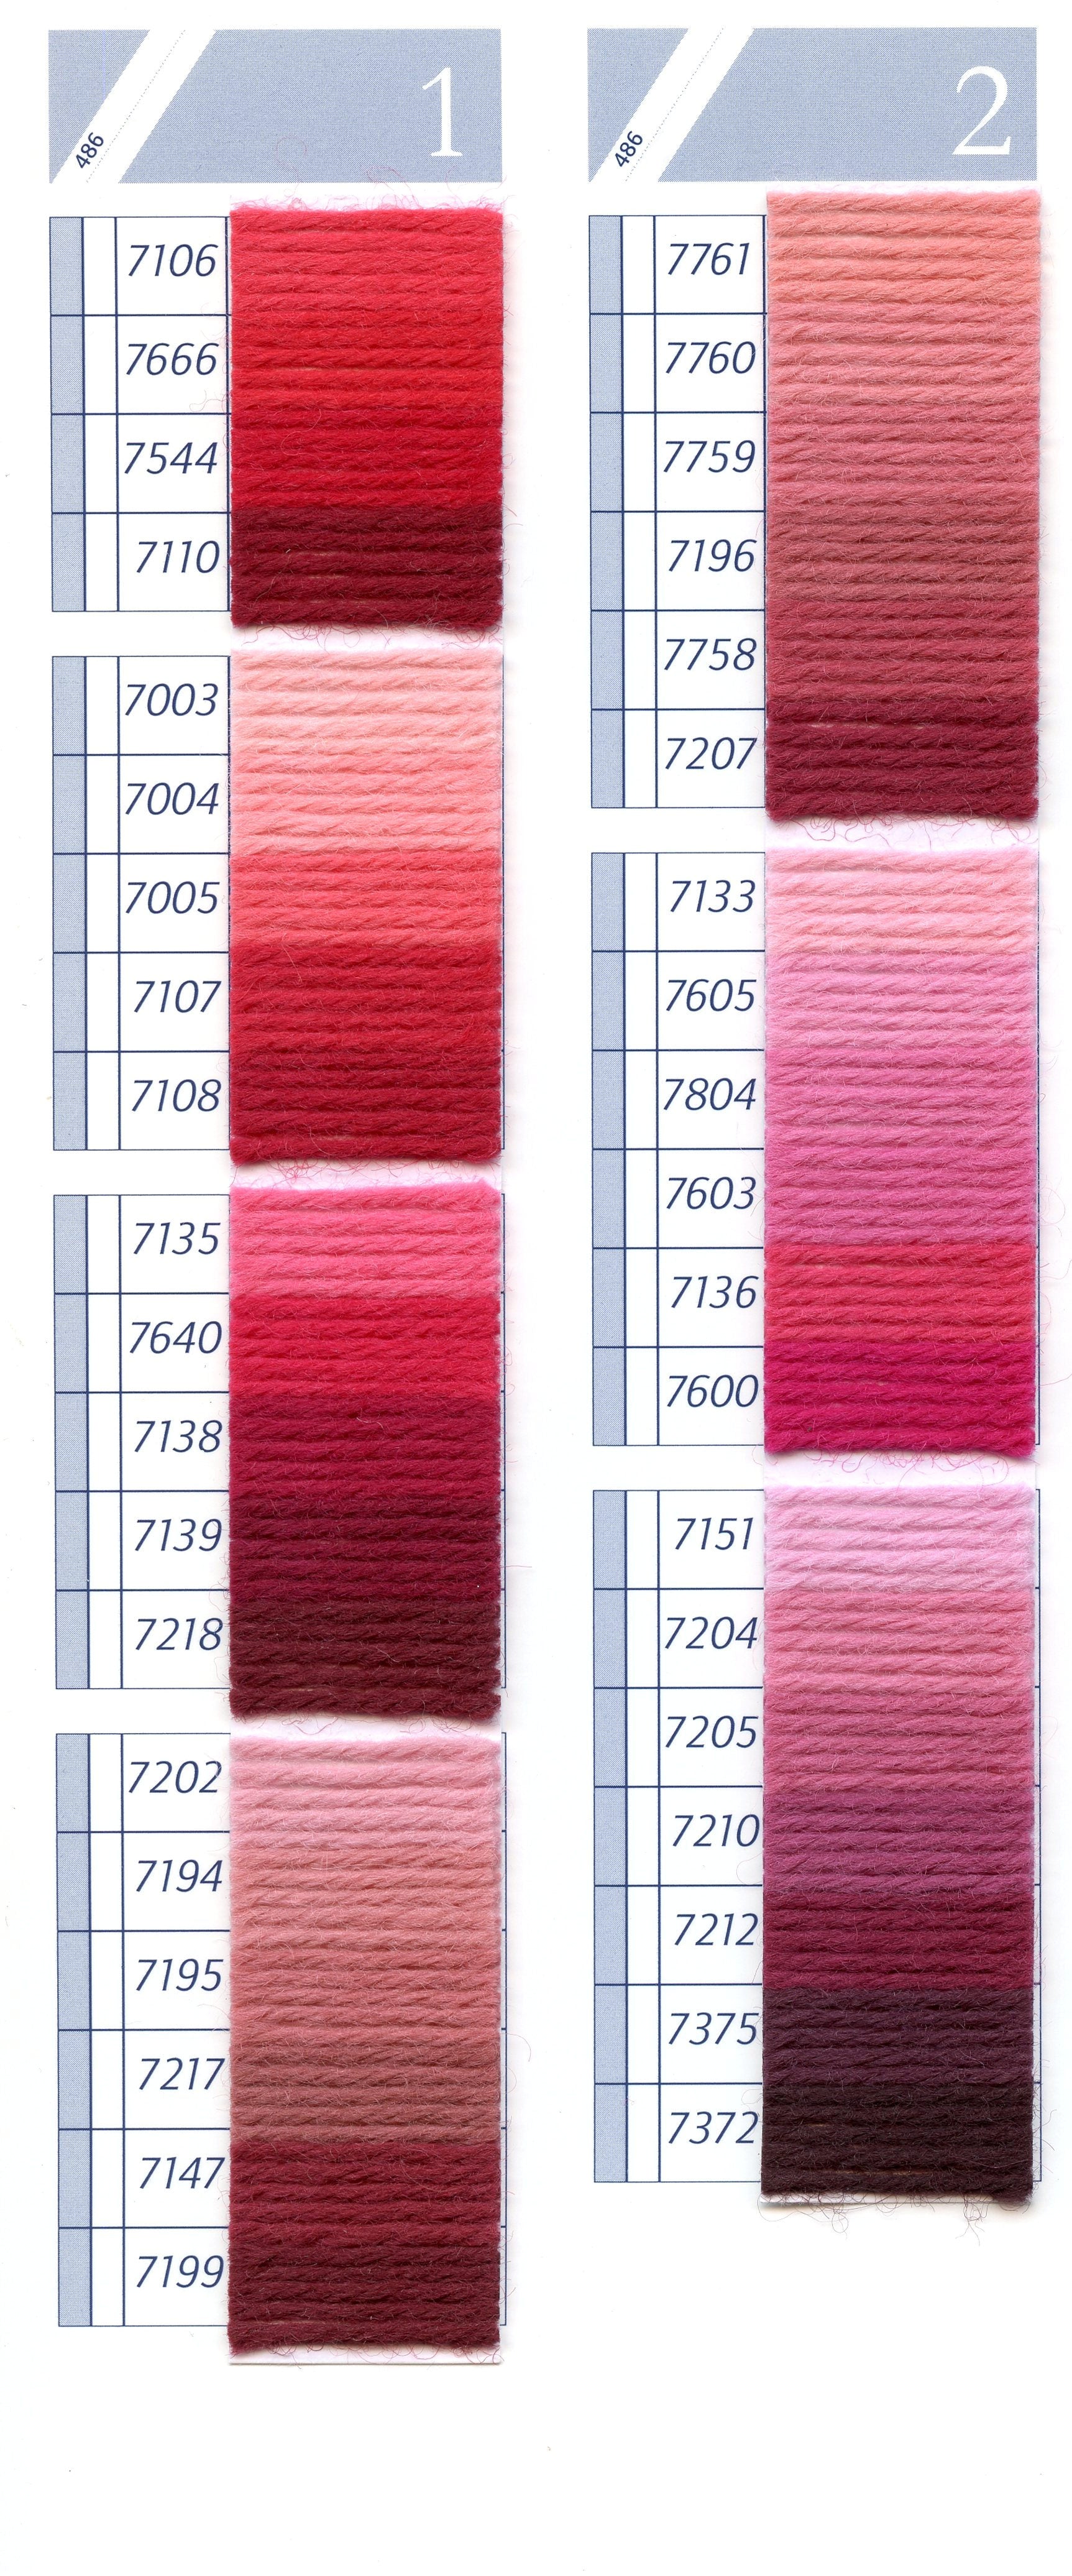 DMC Tapestry Wool Colour Chart - Columns 1 & 2